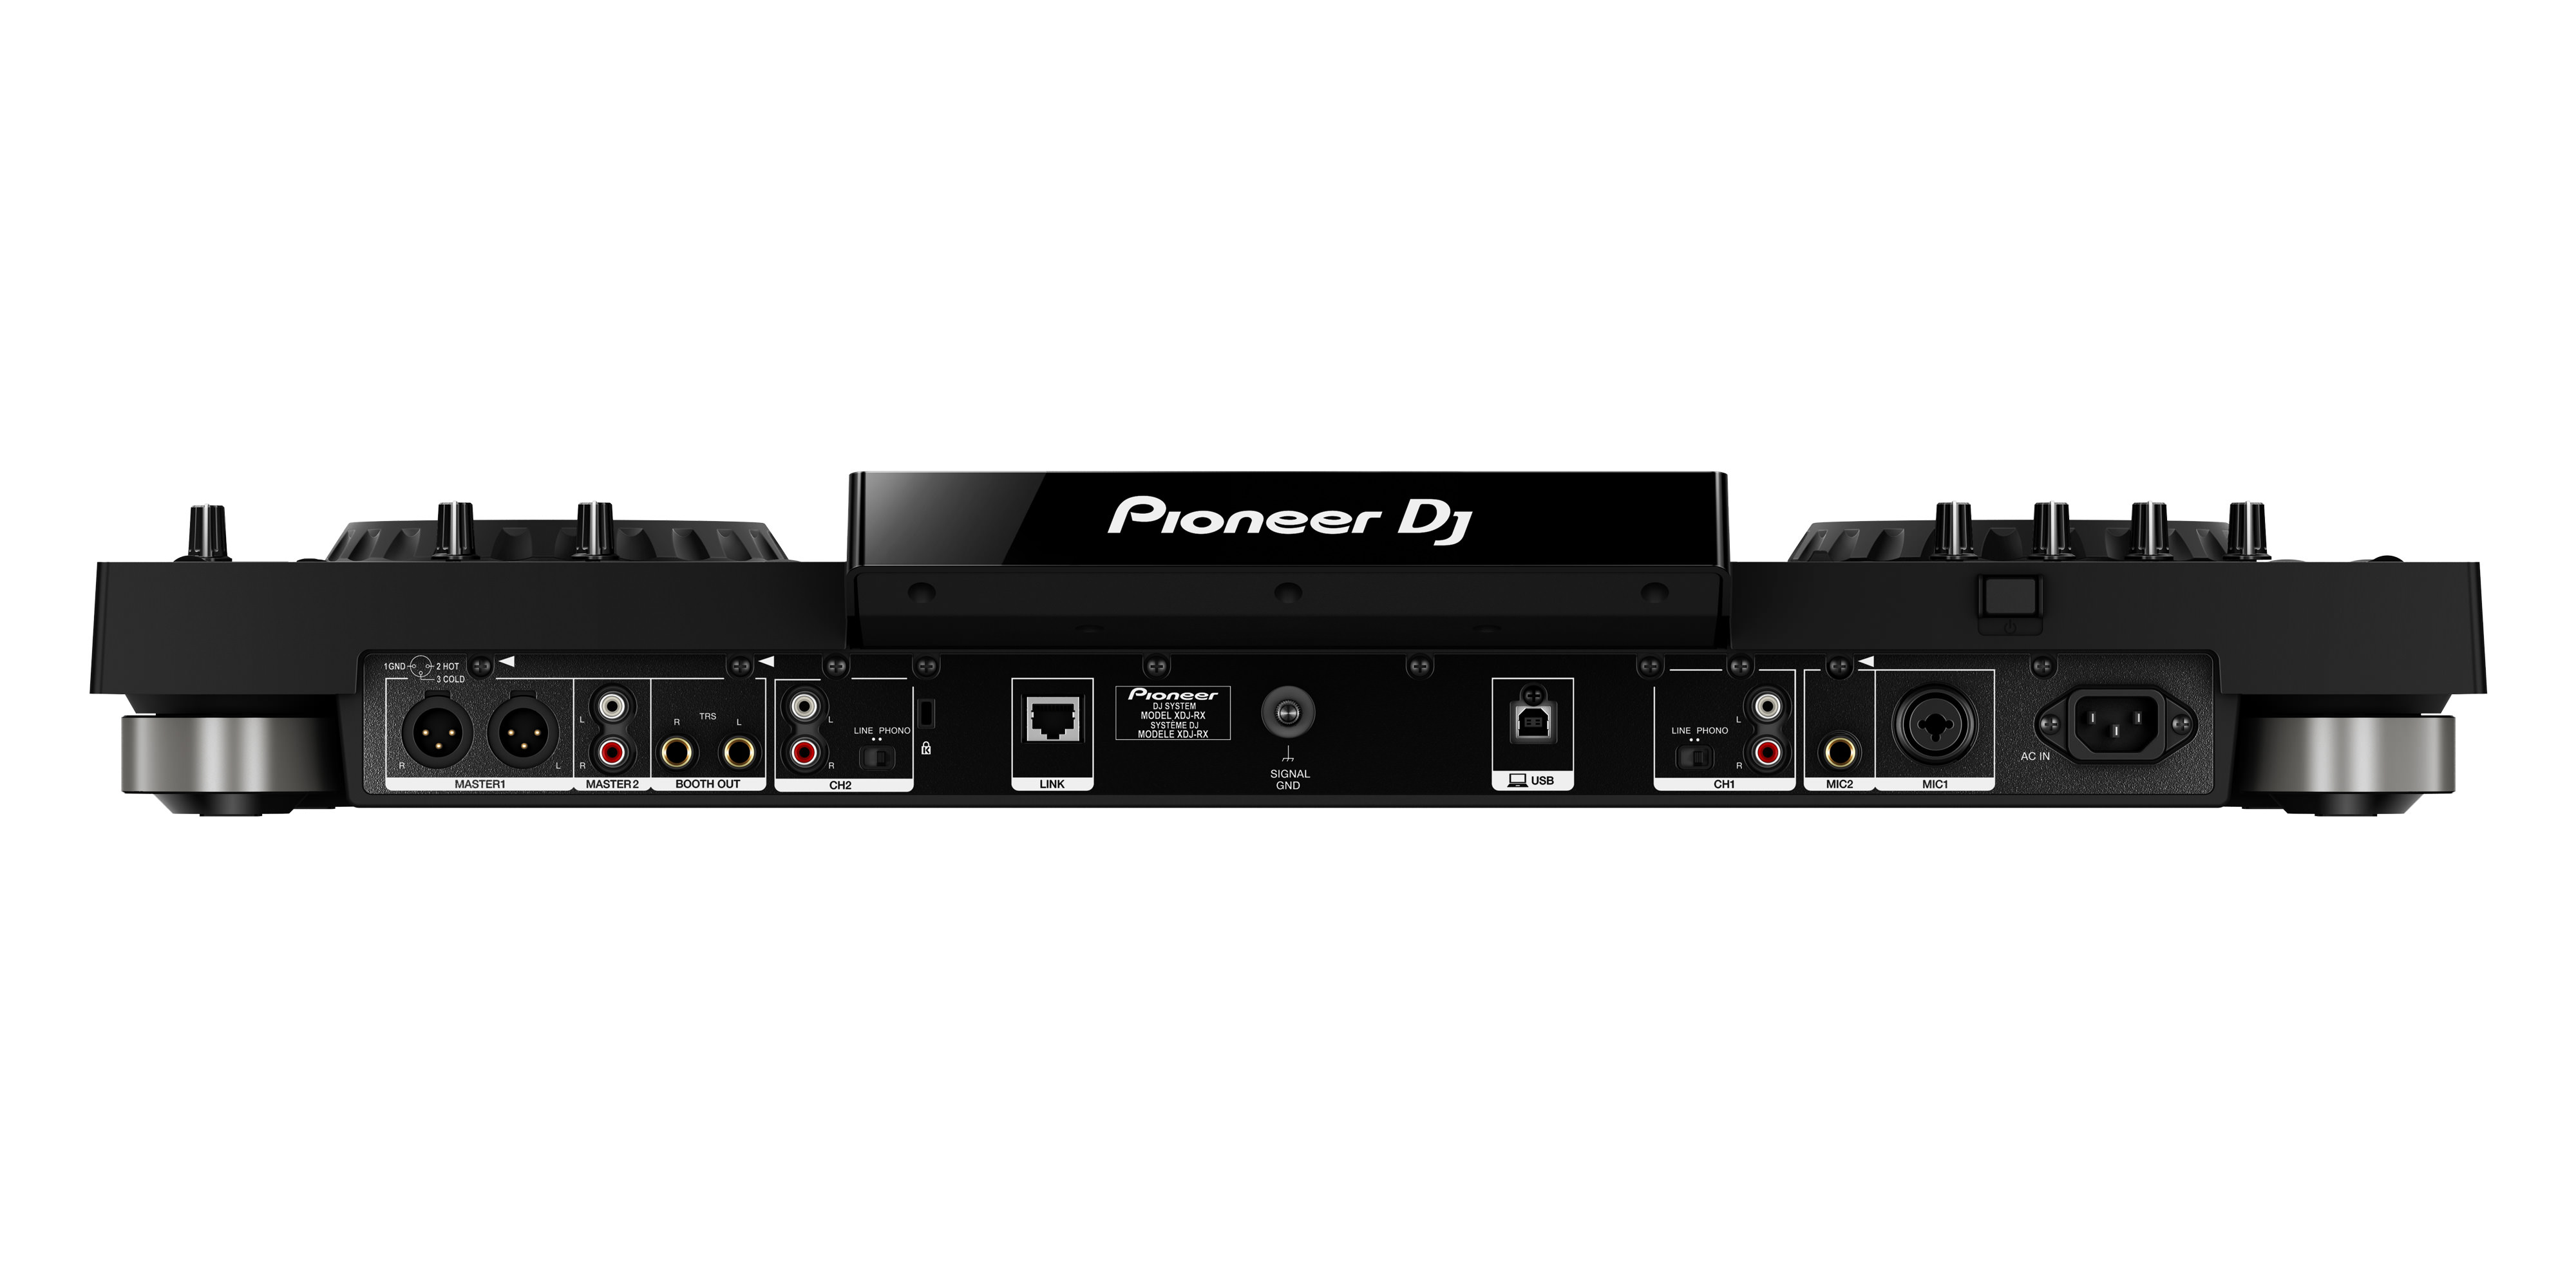 Pioneer DJシステム XDJ-RX 3/19(木)より販売開始！ – DTMers